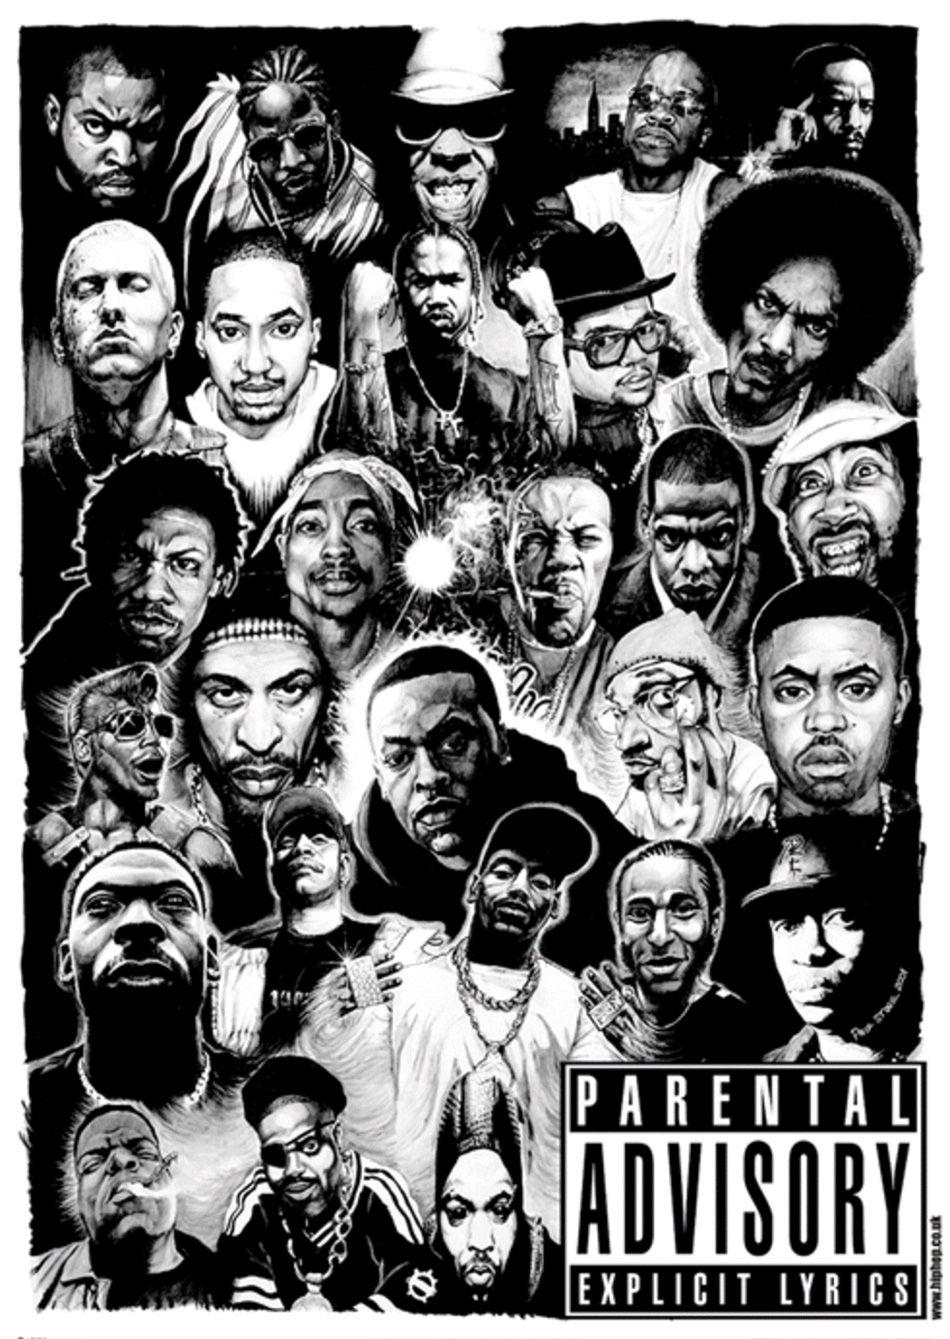 90s Rapper Wallpaper Free 90s Rapper Background